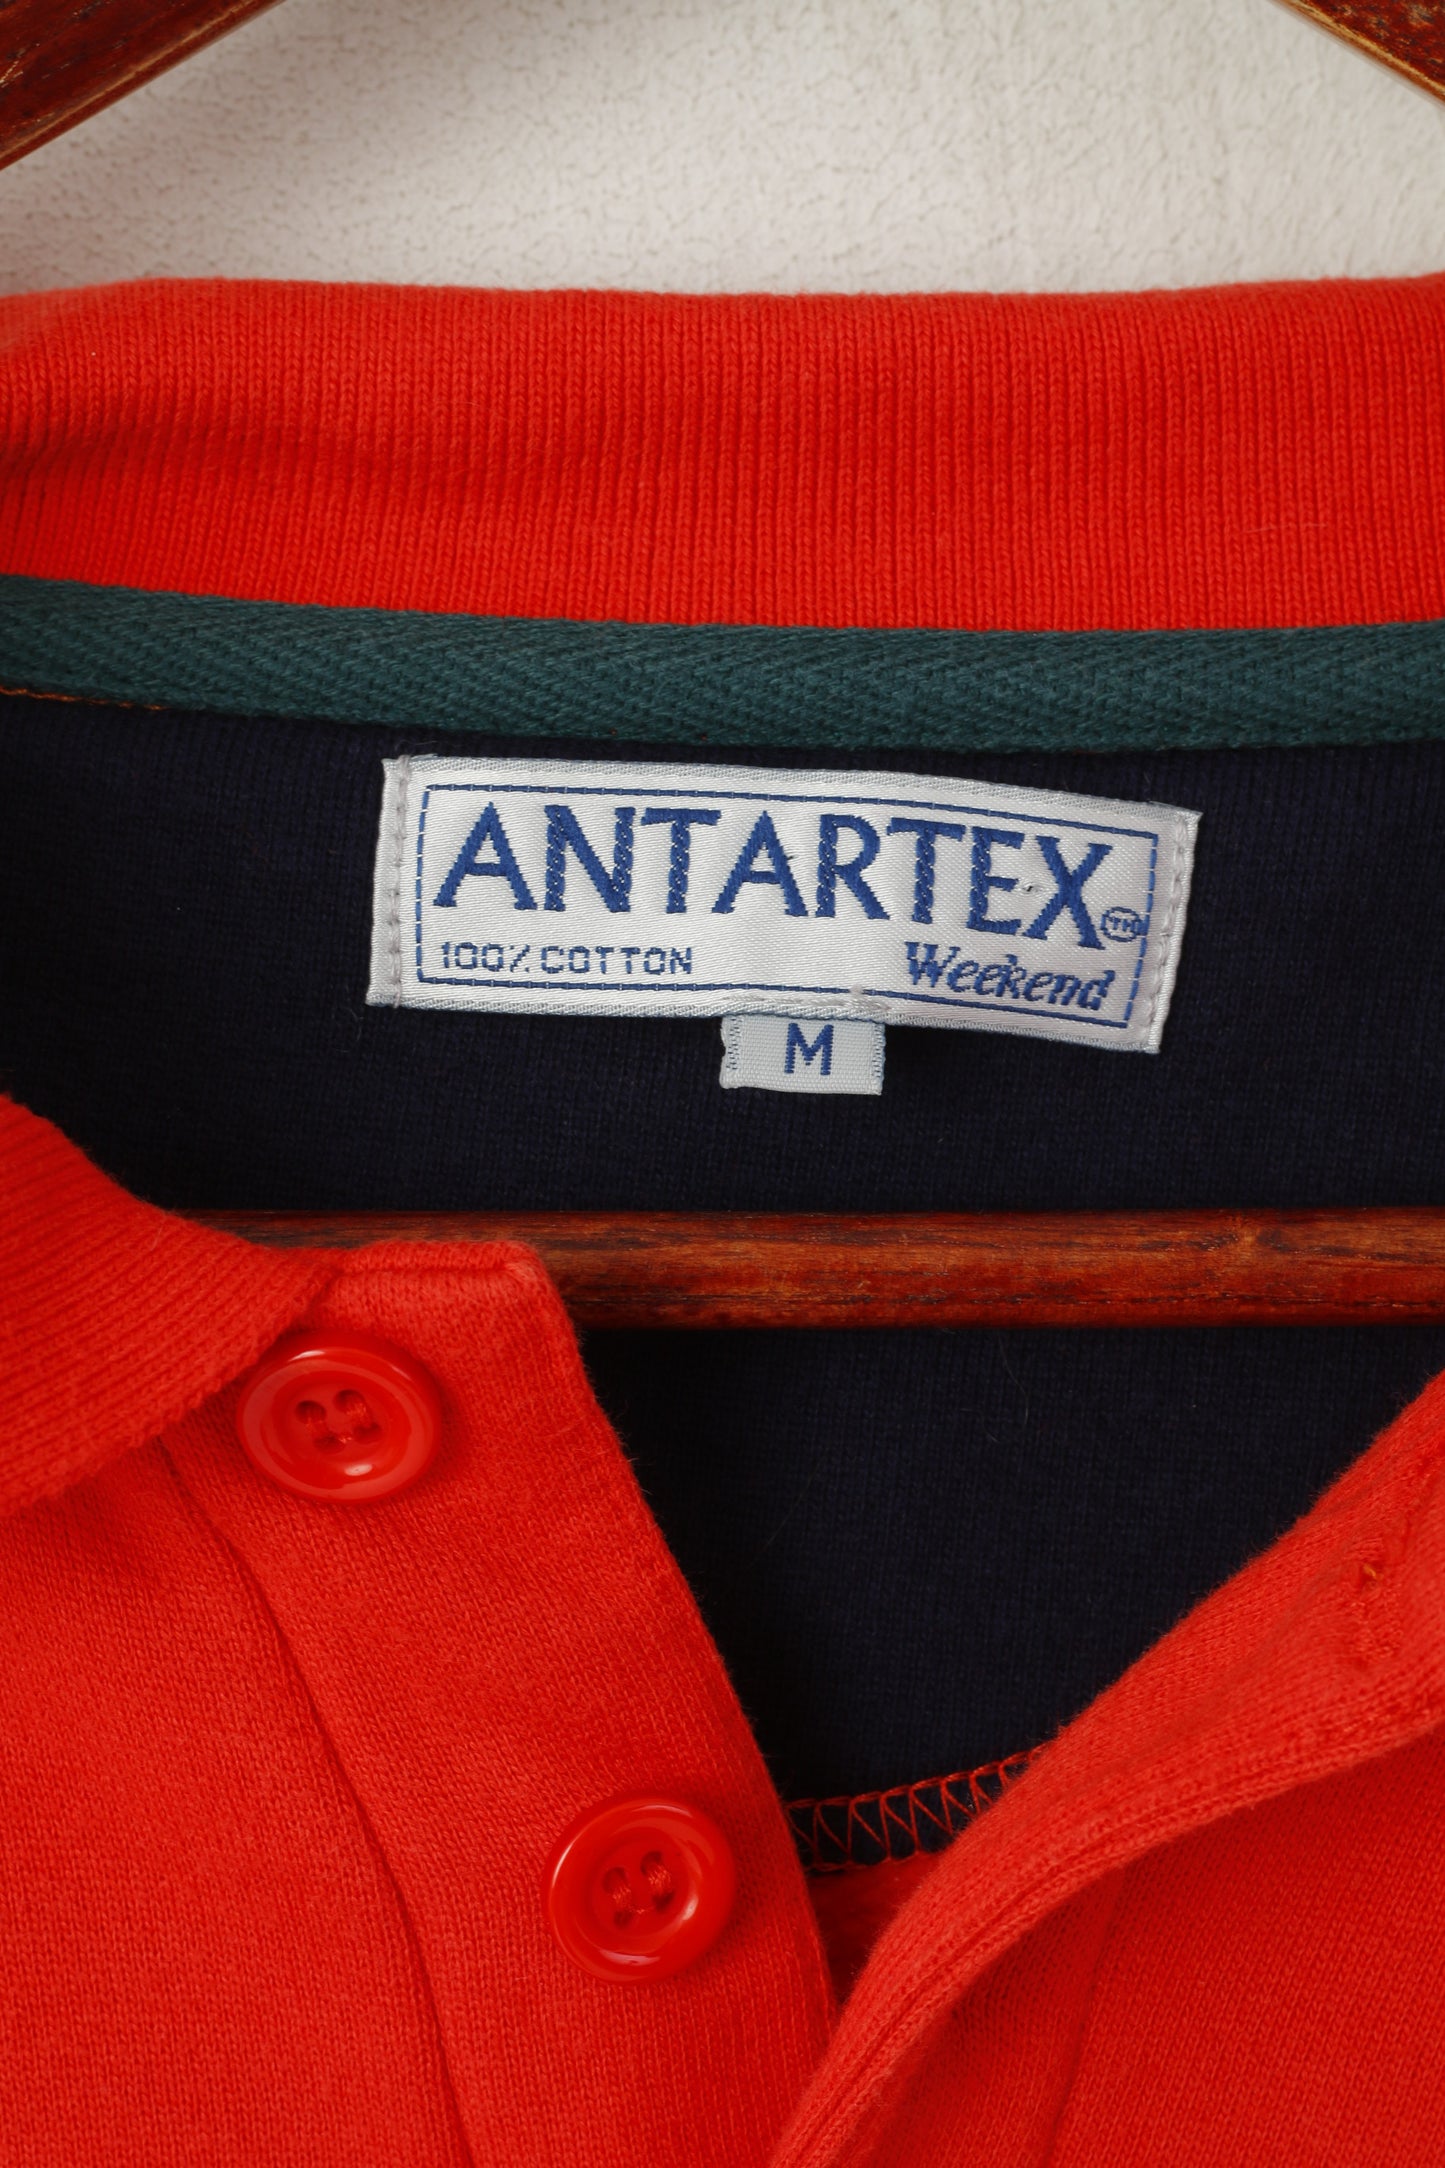 Antartex Weekend Men M Sweatshirt Orange Cotton Collared Casual Jumper Top